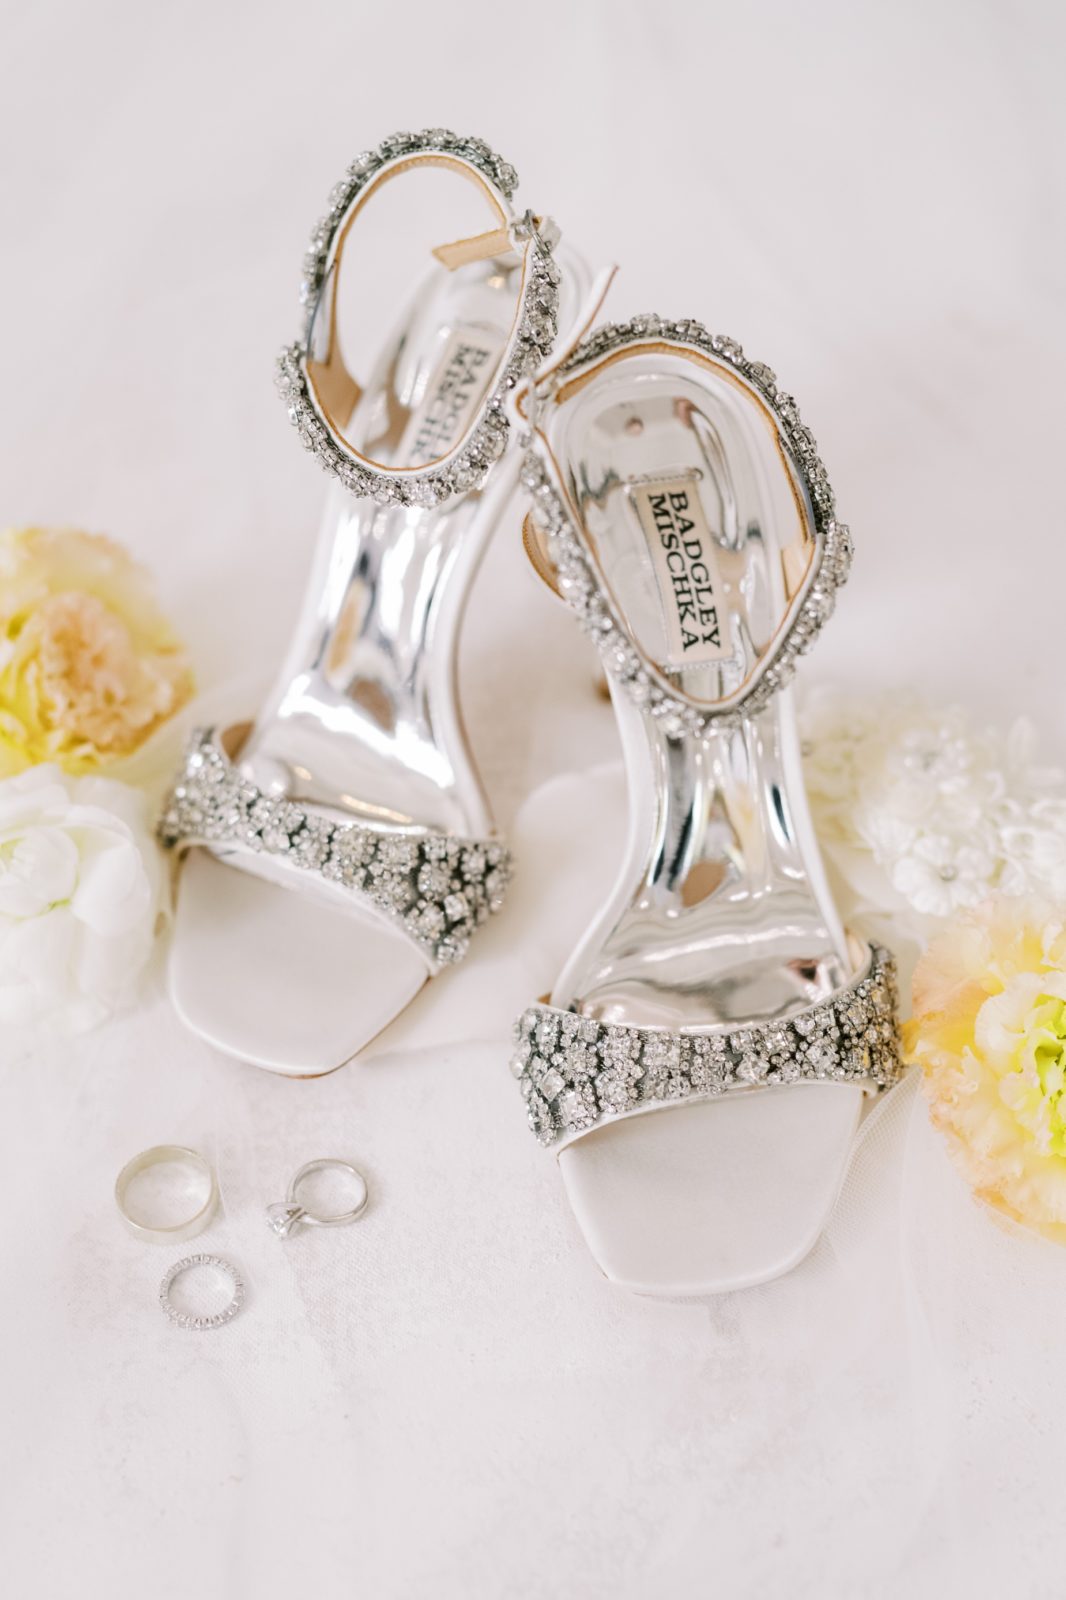 Silver diamond studded wedding stiletto shoes next to the wedding ring by Christina Elliott Photography. bridal shoes silver #ChristinaElliottPhotography #ChristinaElliottWeddings #Houstonweddings #TheSpringsVenue #EastHoustonweddings #Mrs #Mr